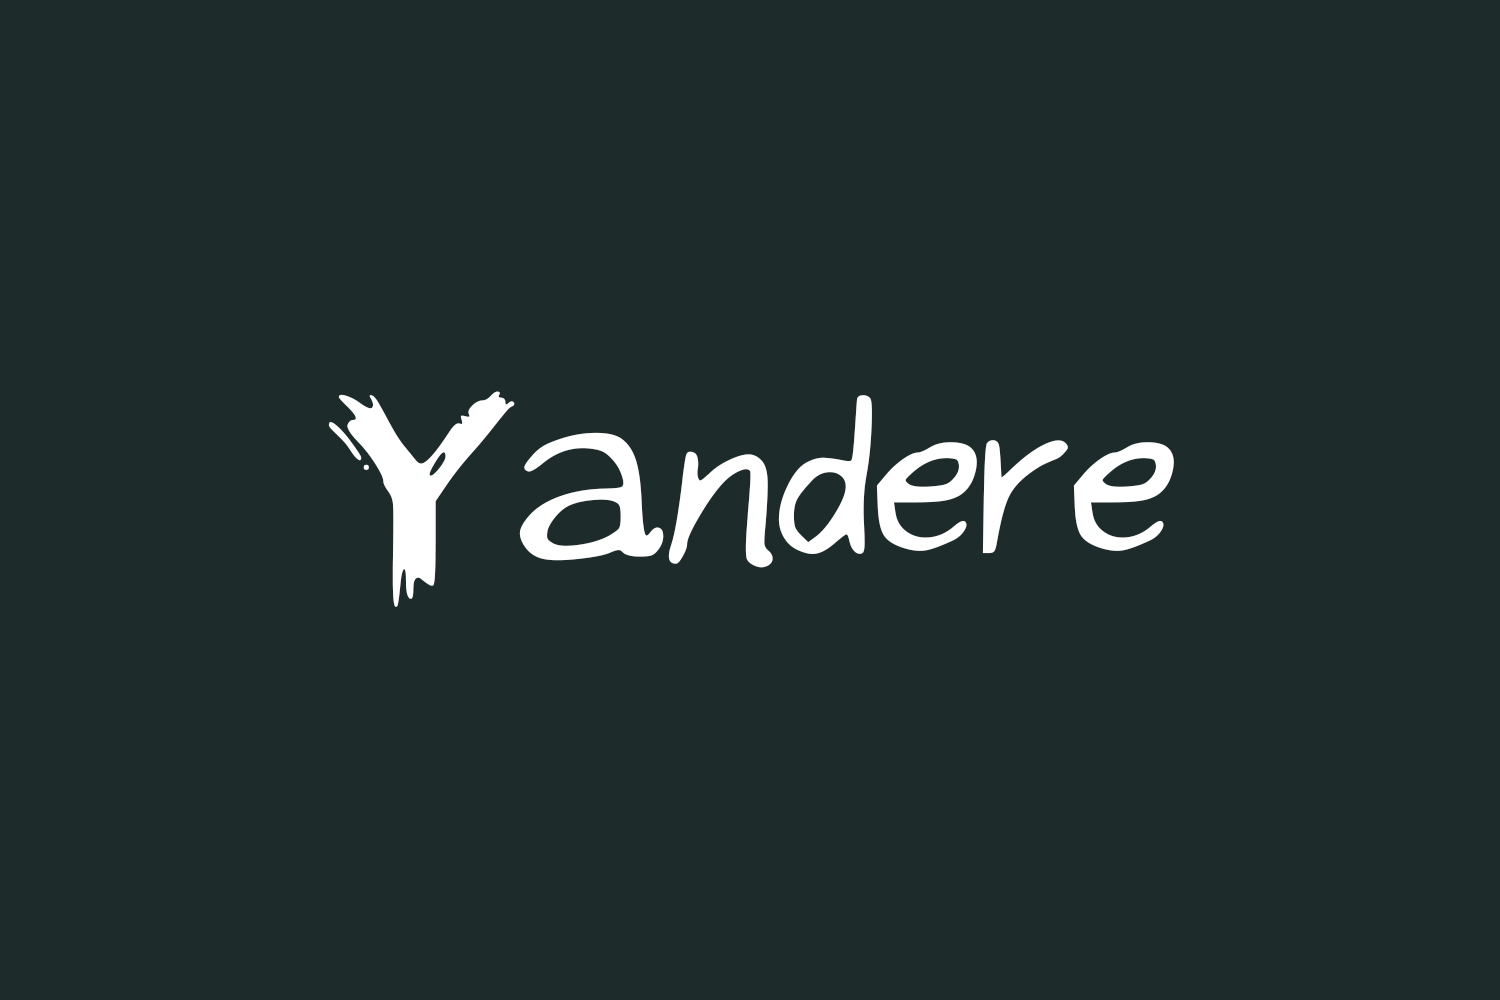 Yandere Free Font